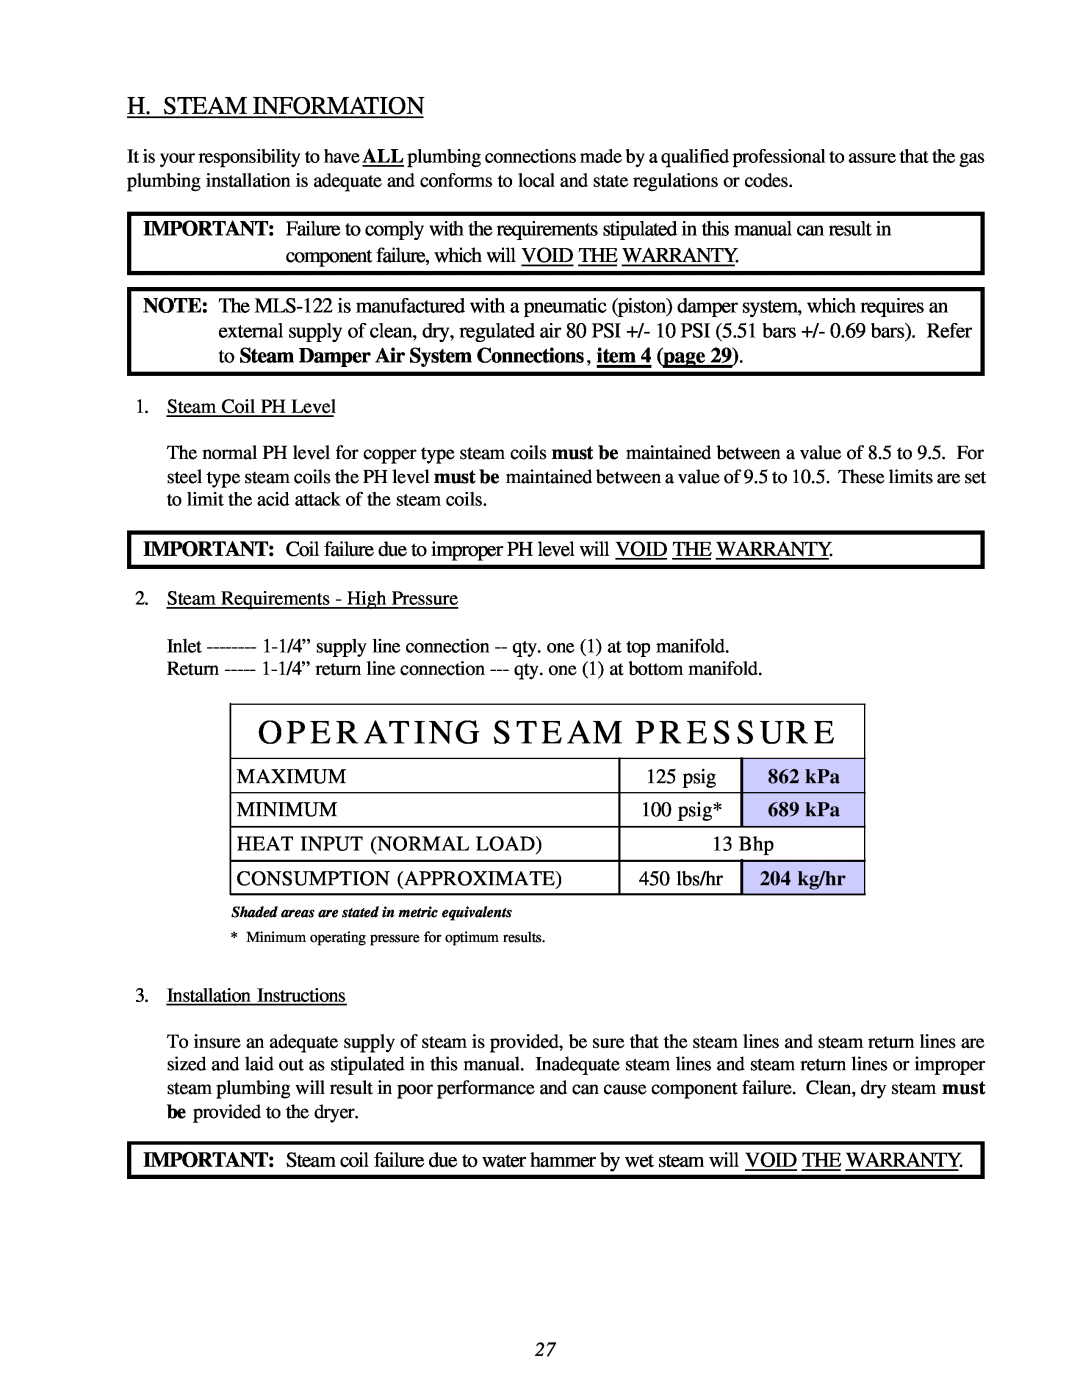 American Dryer Corp ML-122D installation manual Operating Steam Pressure, H. Steam Information, 862 kPa, 689 kPa, 204 kg/hr 